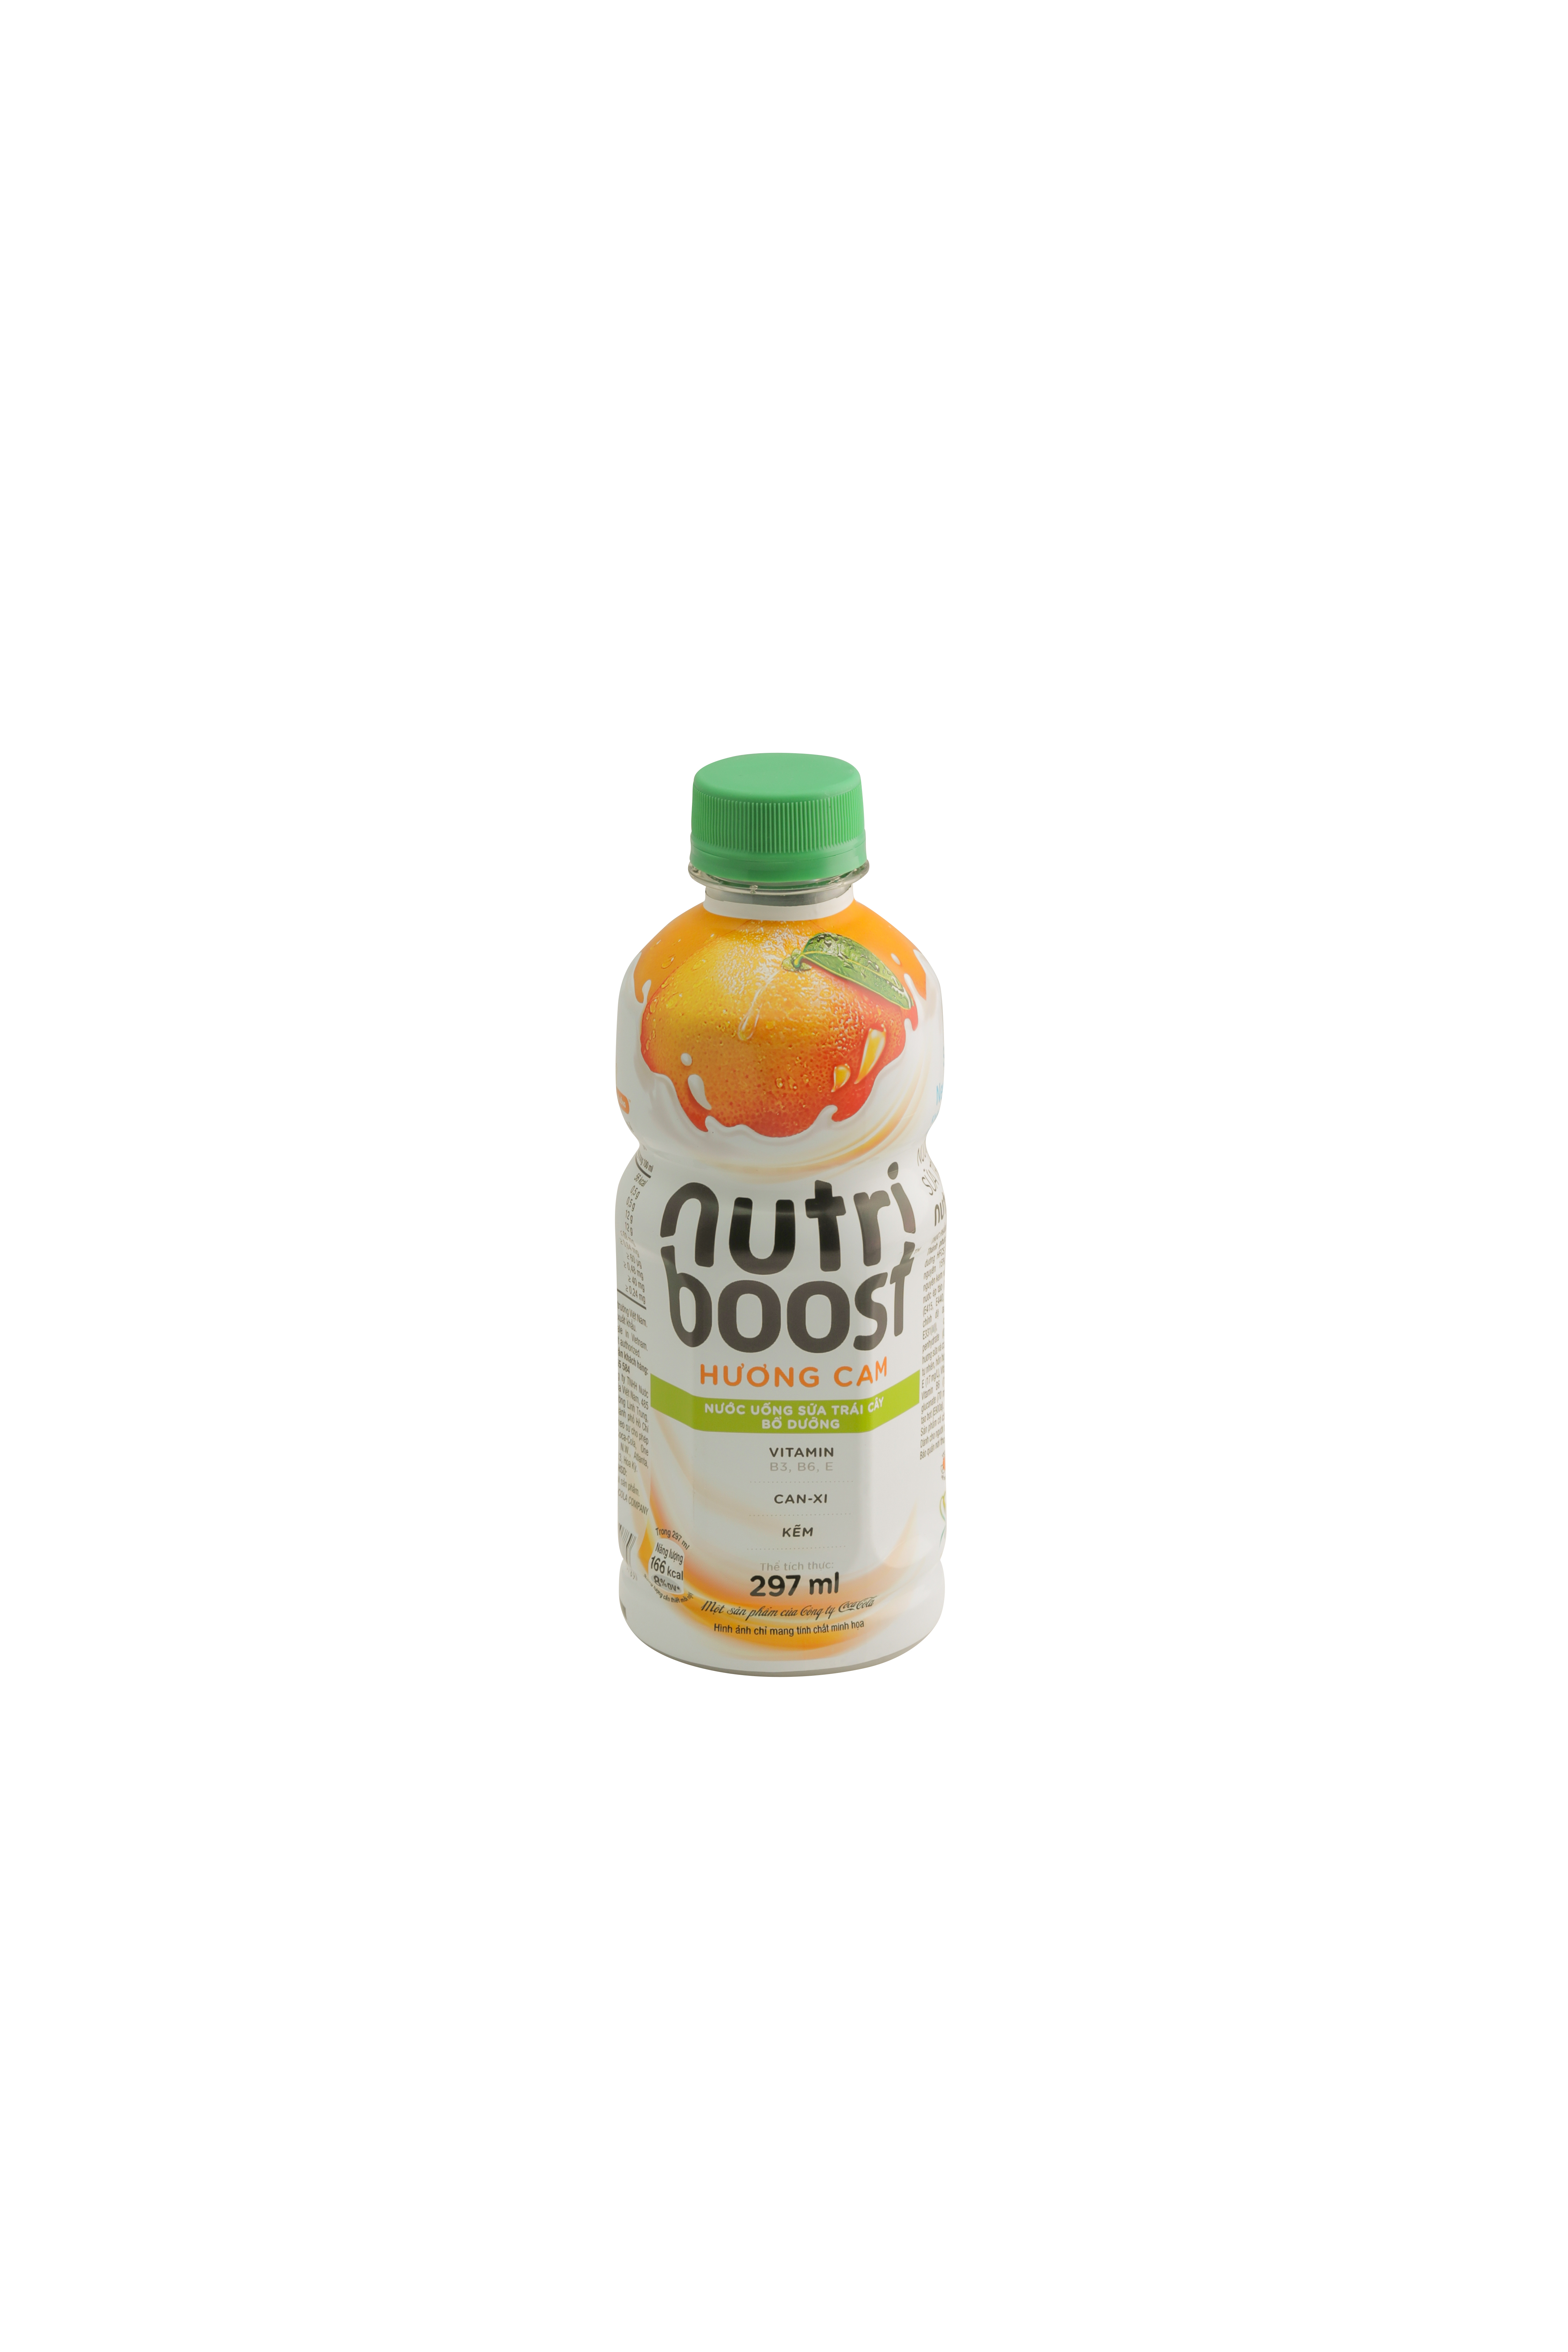 Nutriboost Milk Drink Orange Flavor 297ml